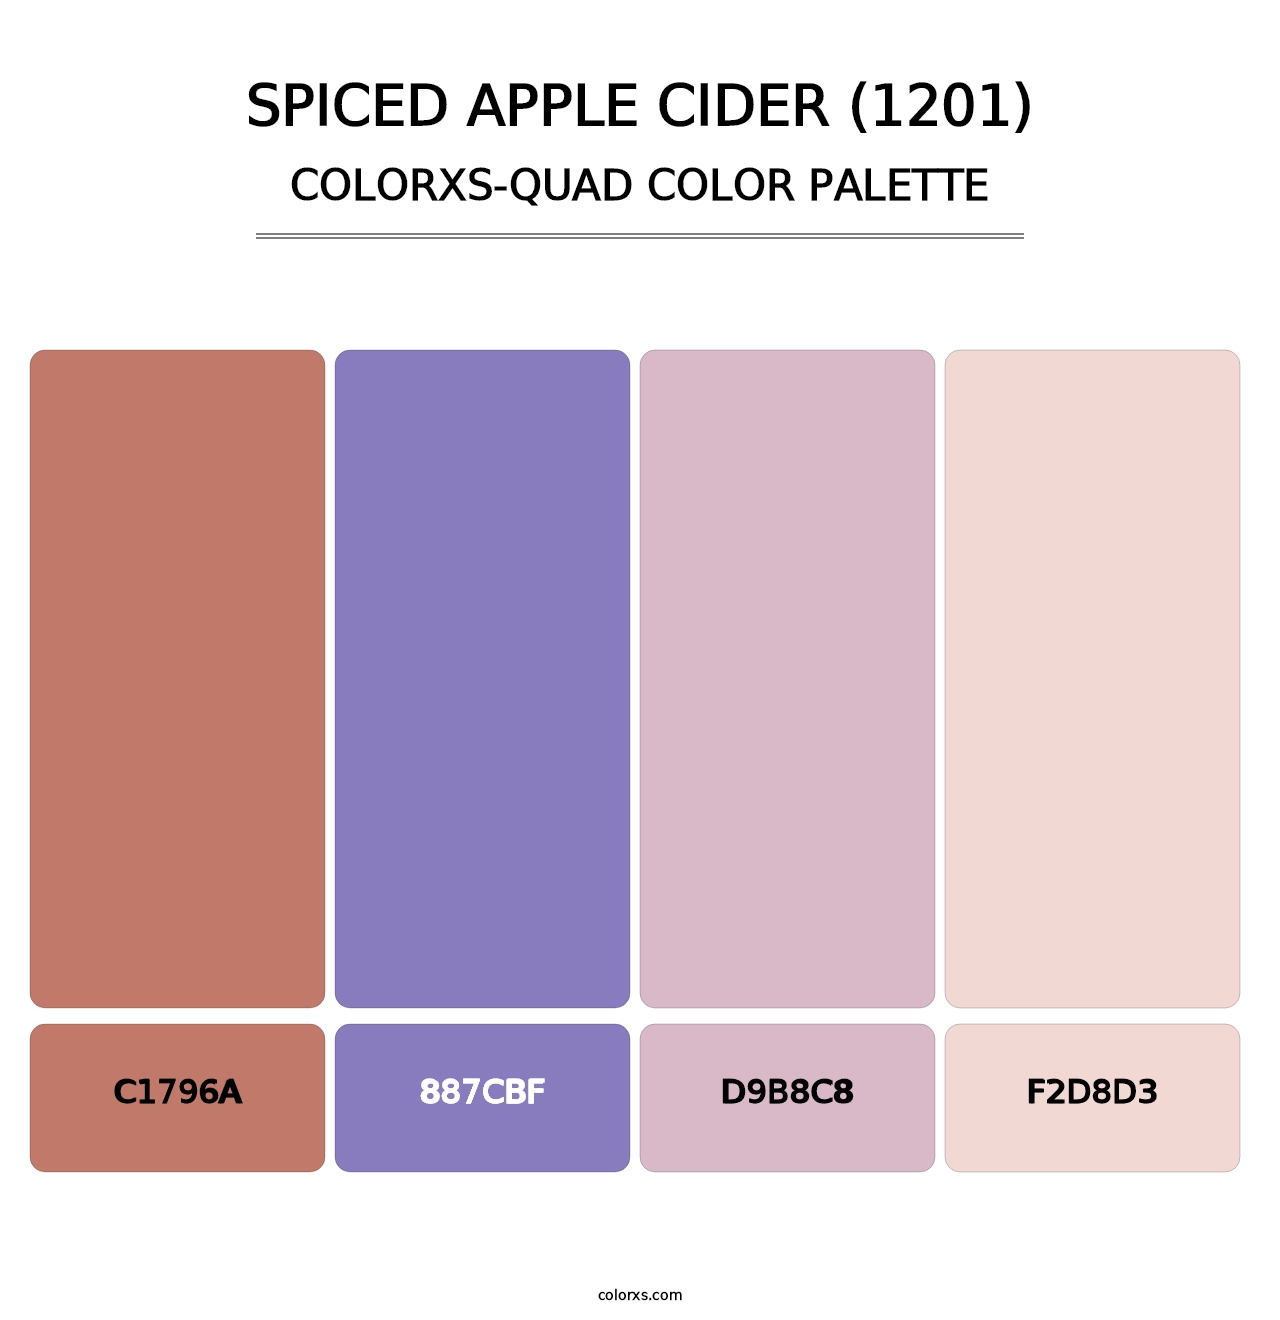 Spiced Apple Cider (1201) - Colorxs Quad Palette